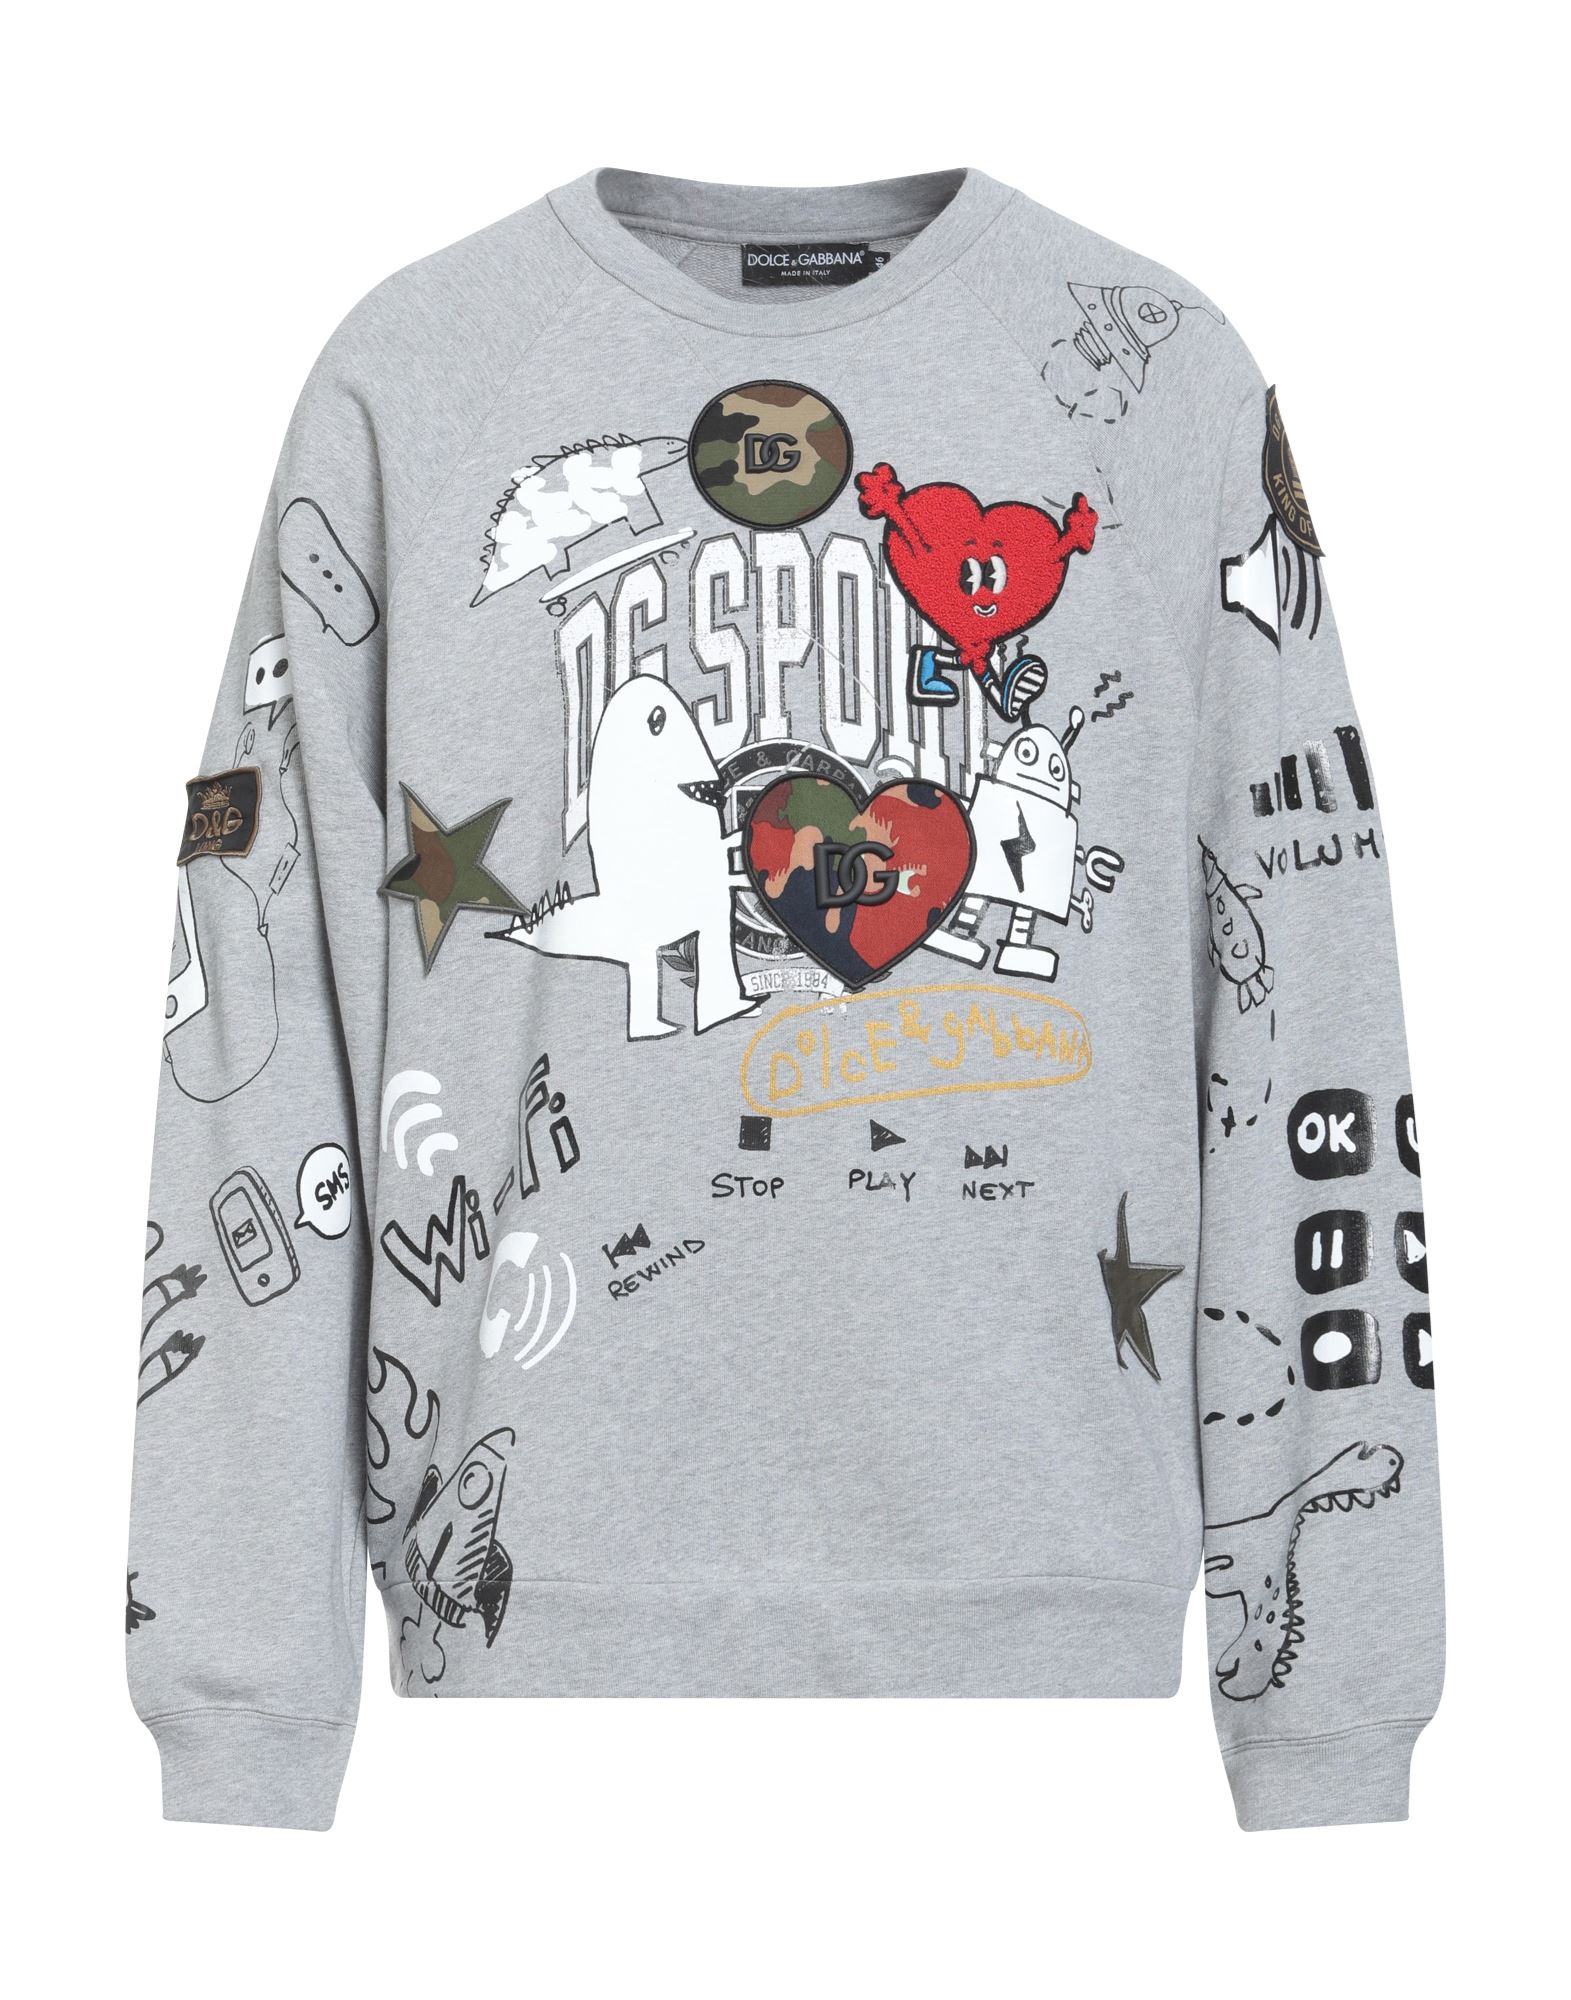 Dolce & Gabbana Sweatshirts In Grey